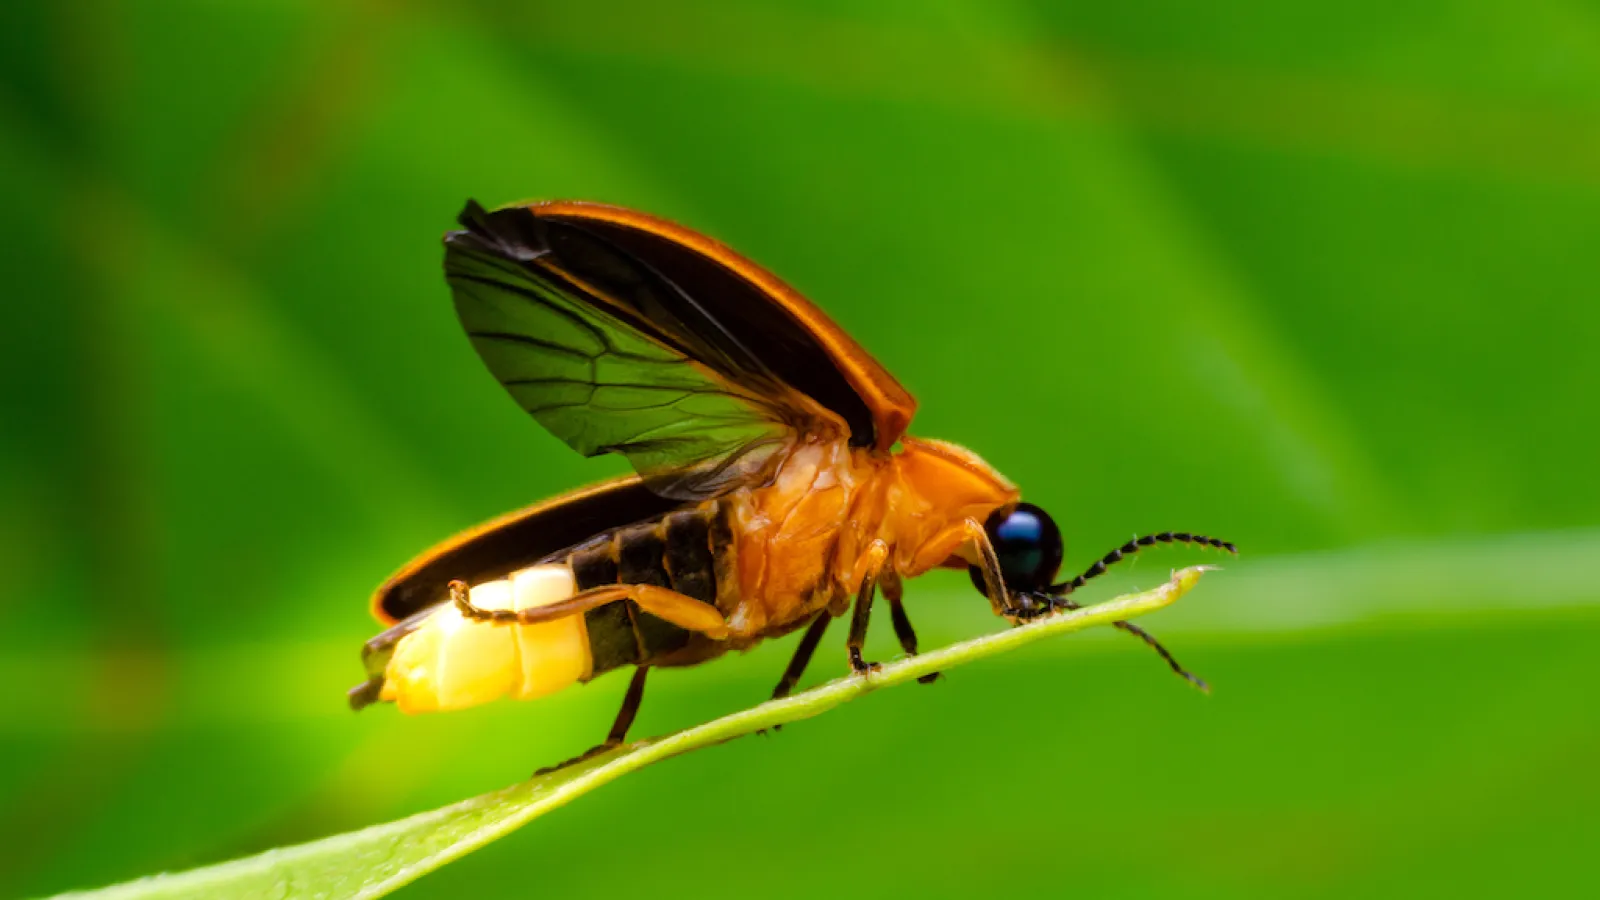 a fly on a leaf